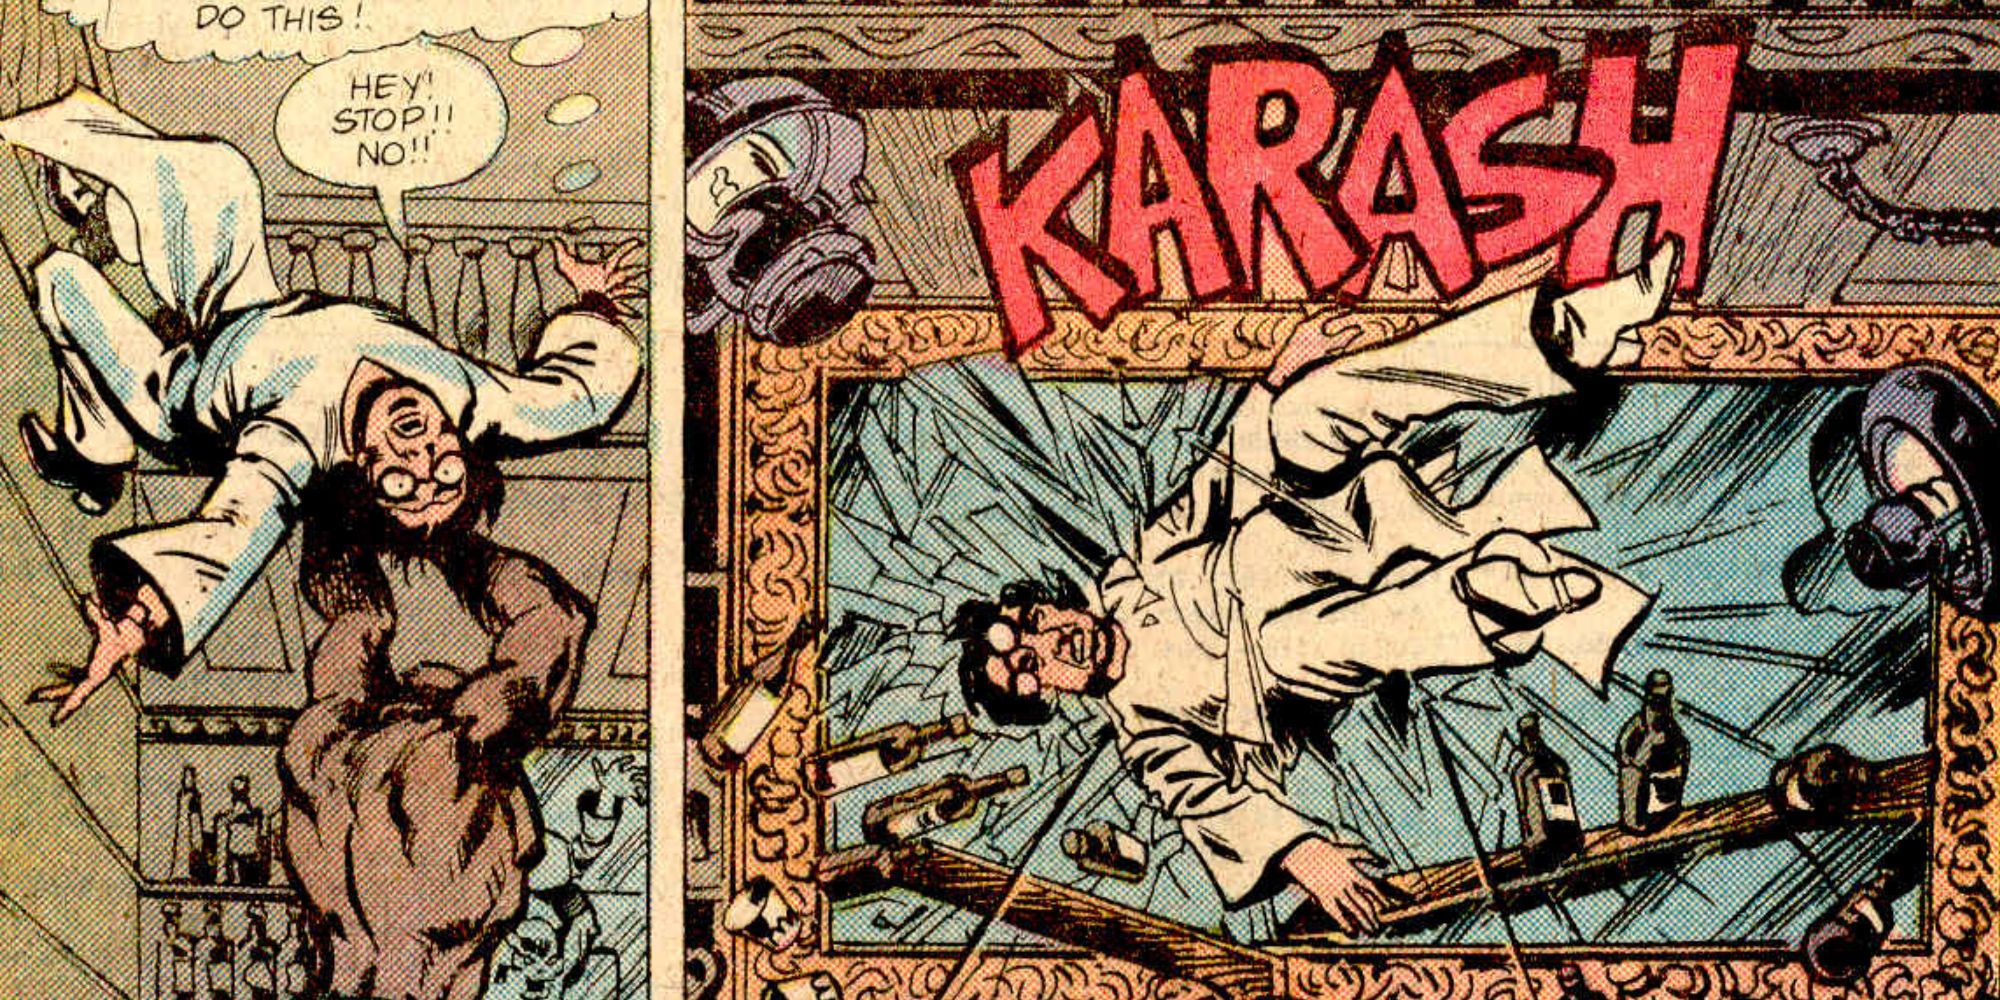 Werewolf By Night throws Dr. Karl Malus through a window in Marvel Comics.